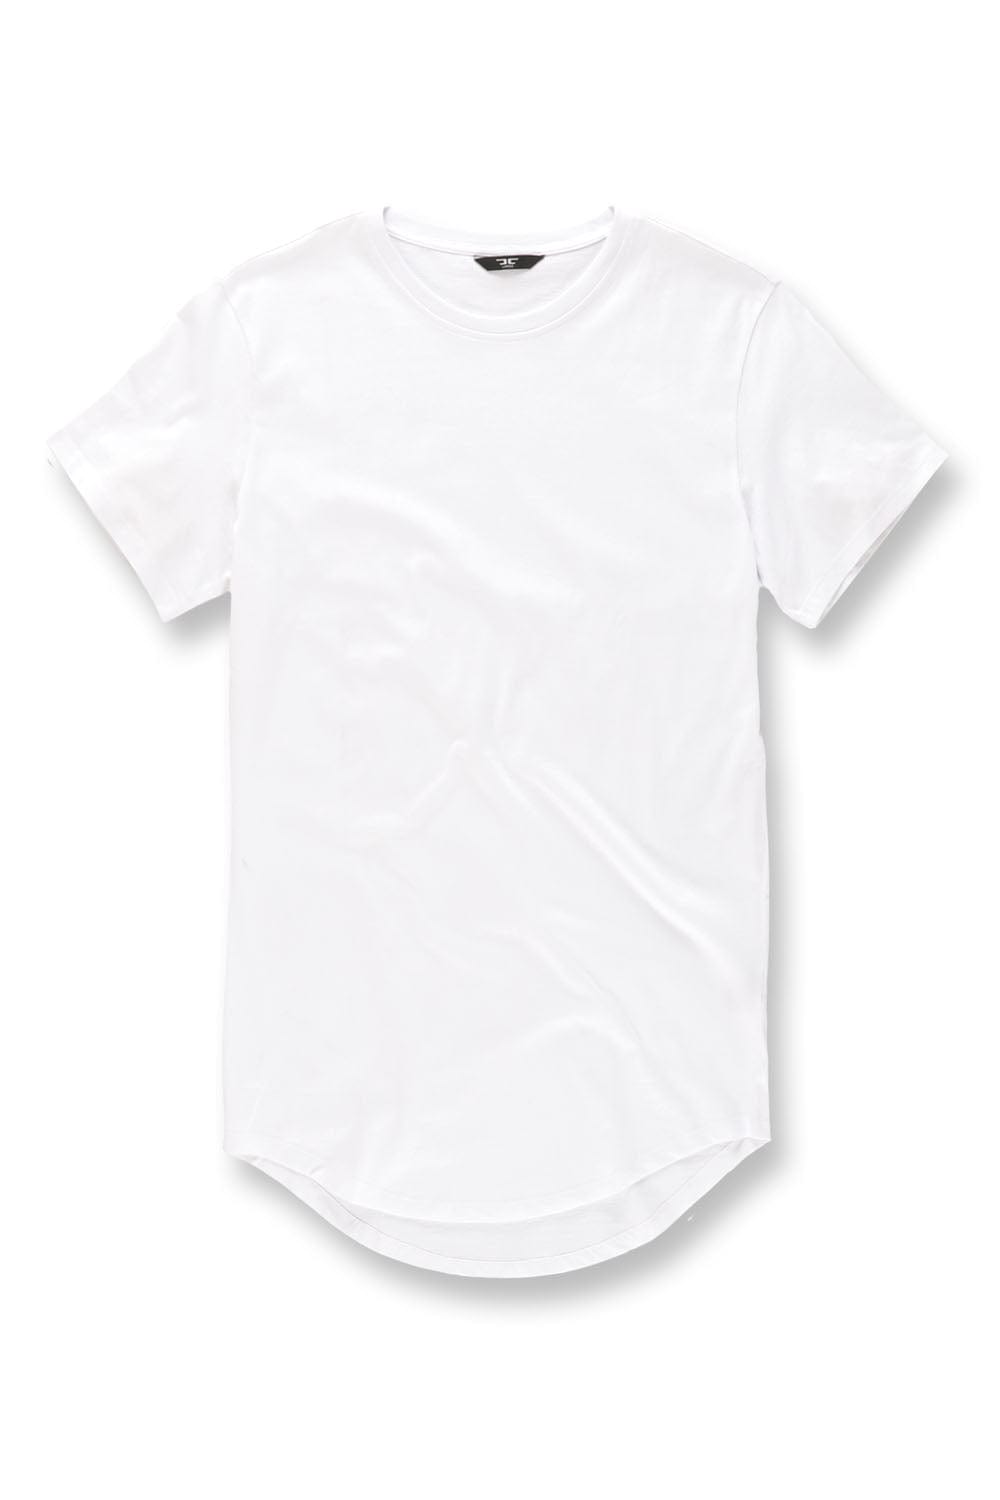 Jordan Craig Scallop T-Shirt White / S